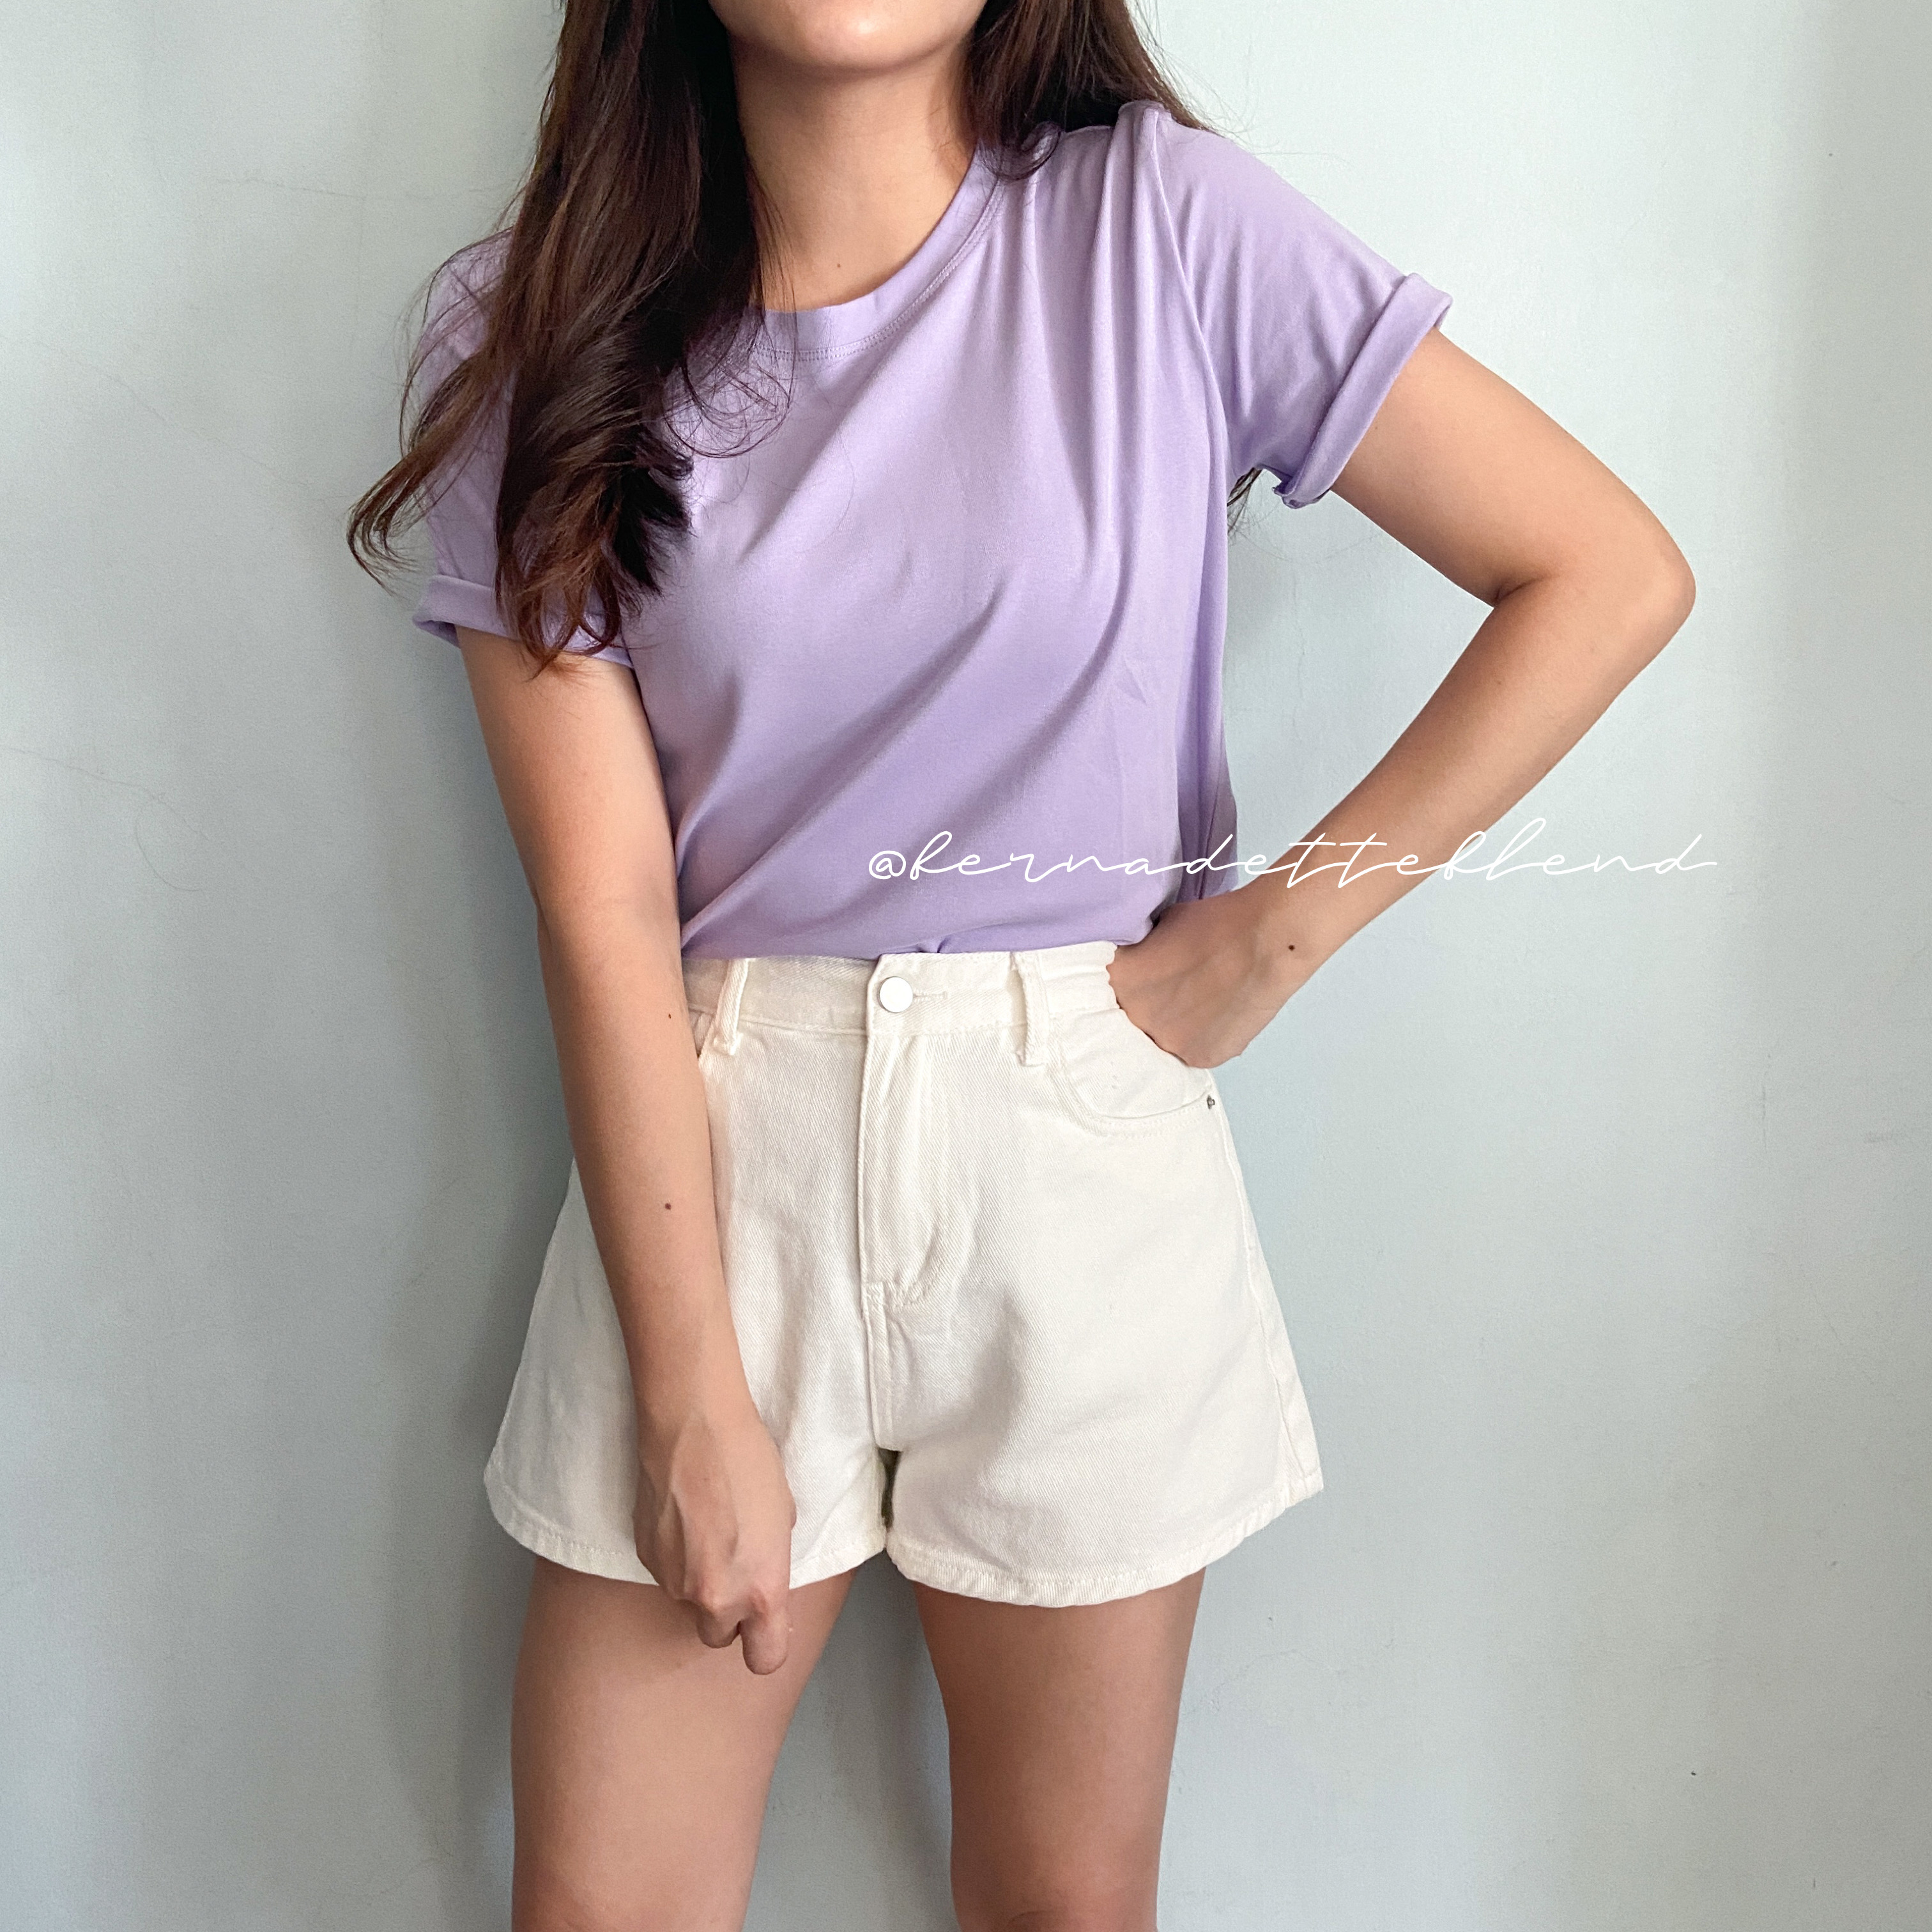 [REJECTED ITEM] Everyday Basic Comfy Tee 穿了不想脱的质感舒适基础T恤  (Purple)